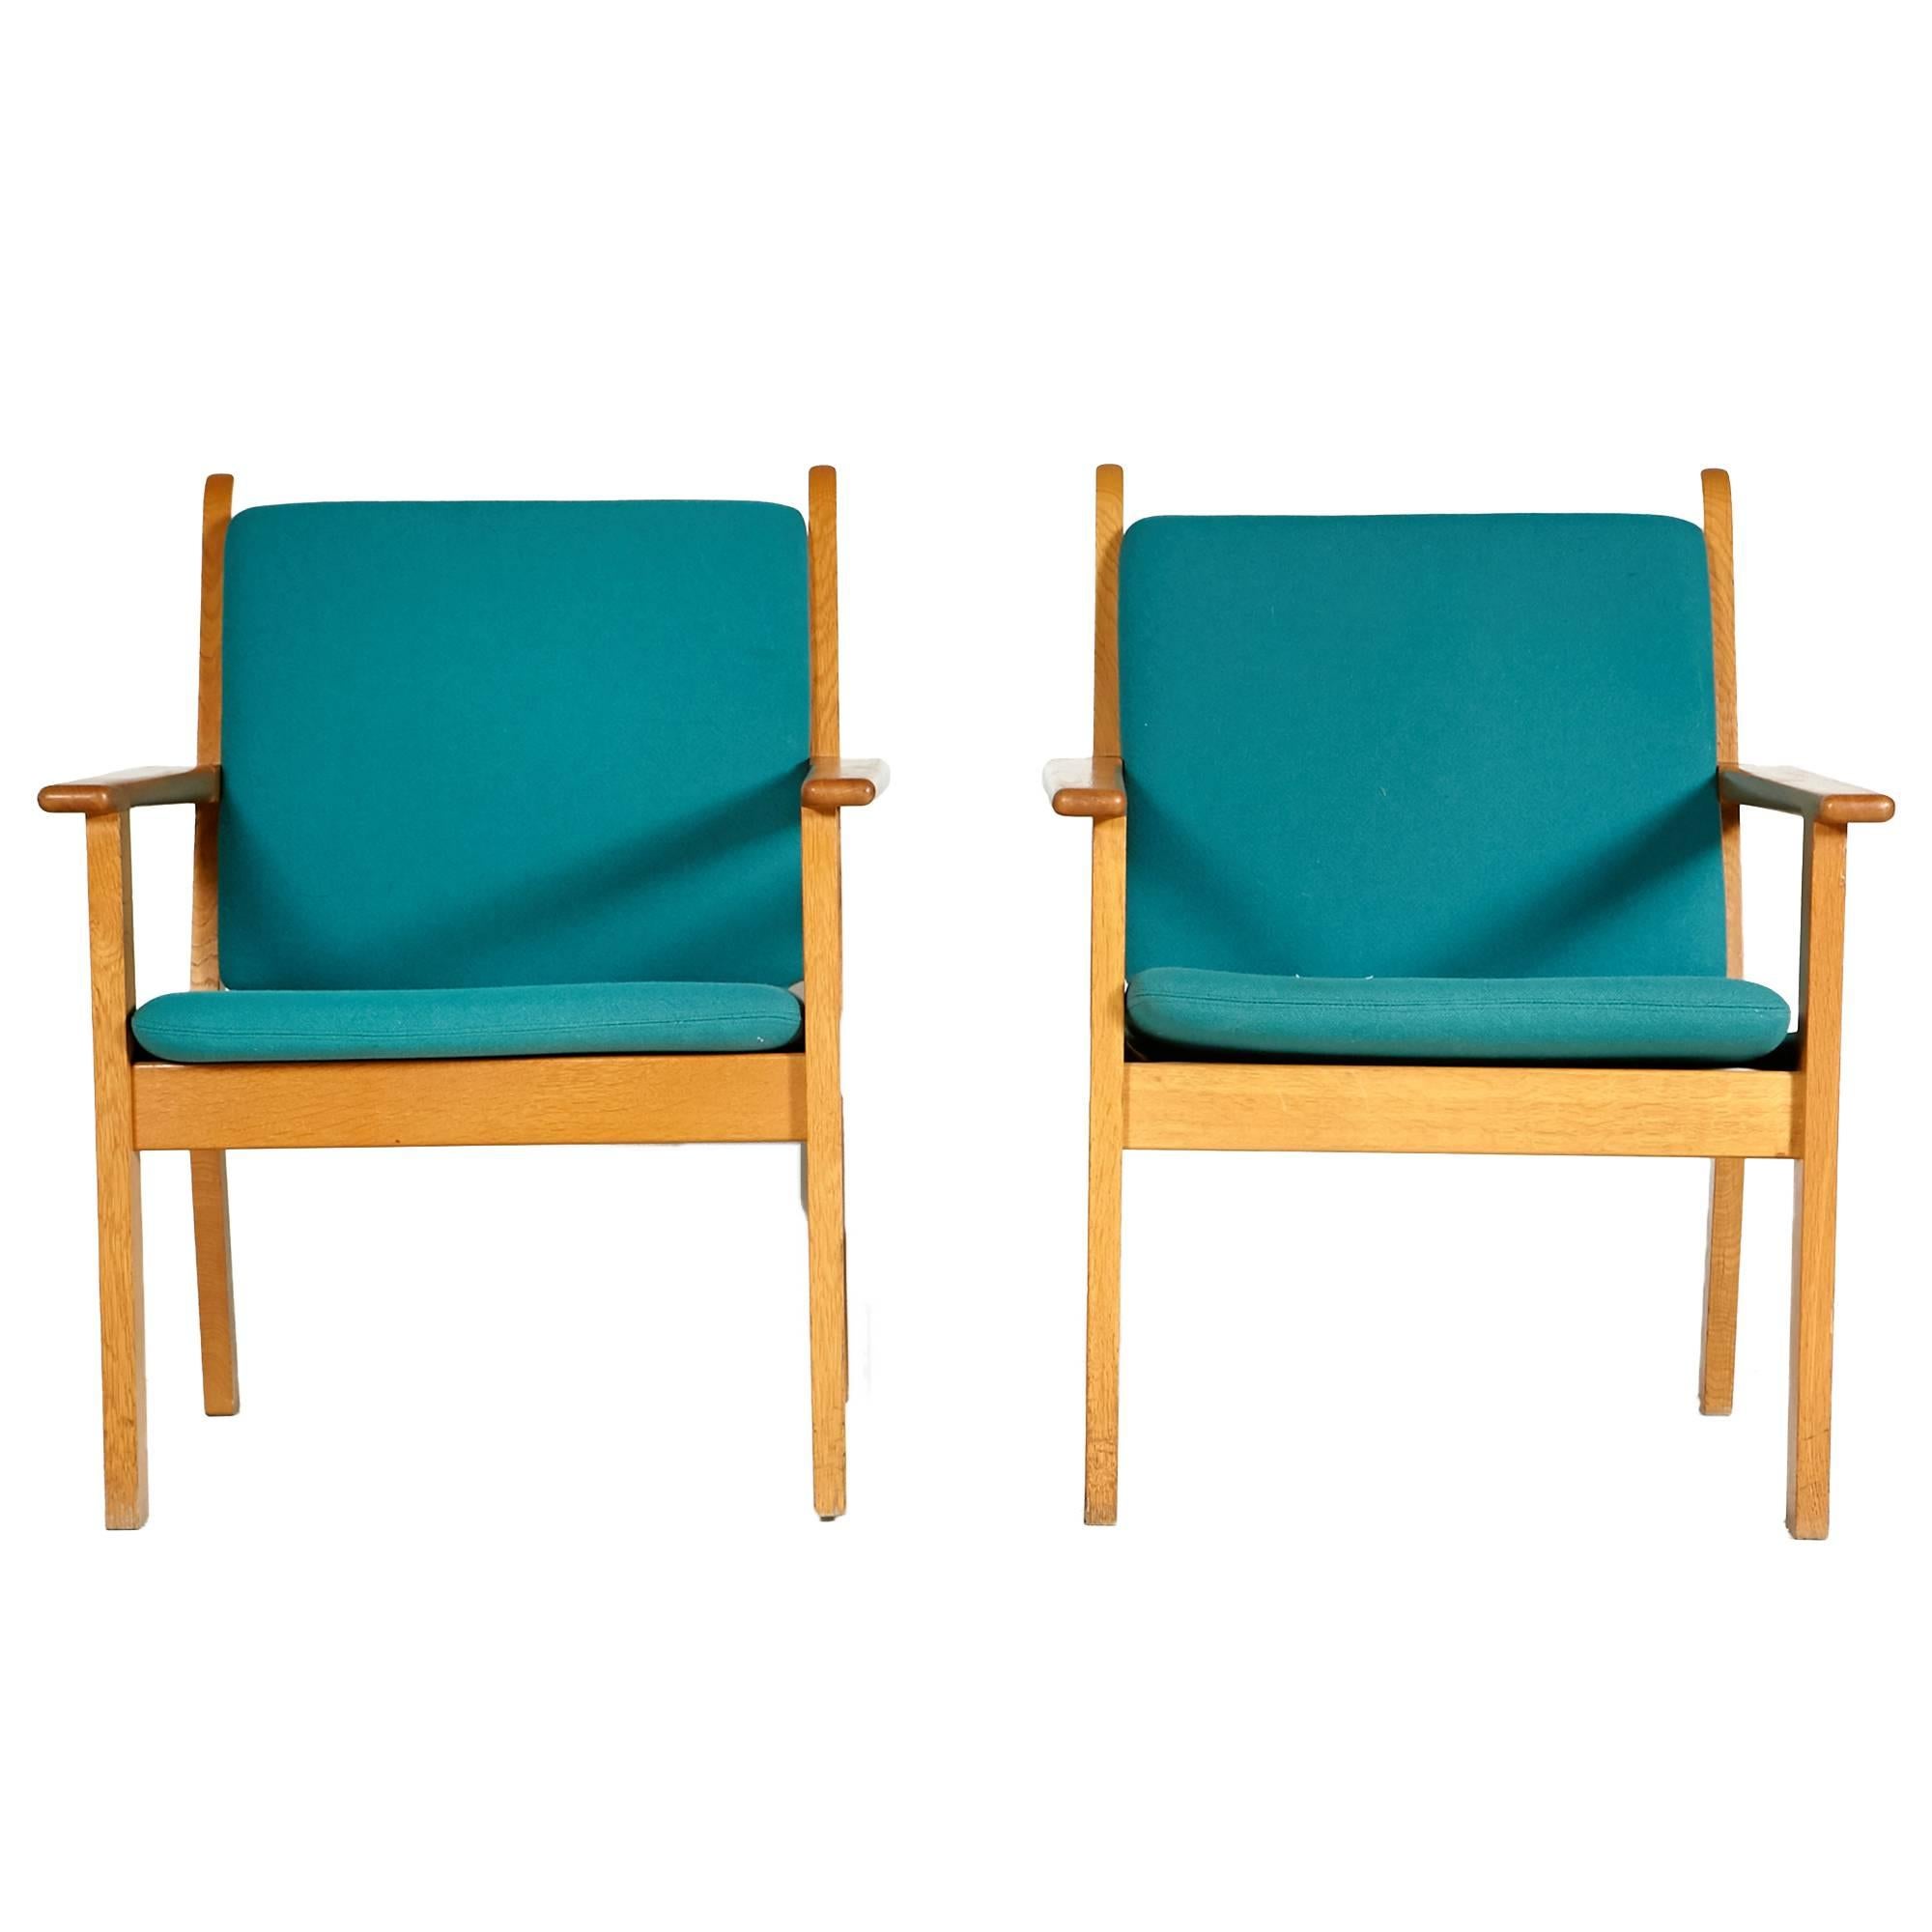 Danish Hans J. Wegner Oak Lounge Chairs by GETAMA, Pair